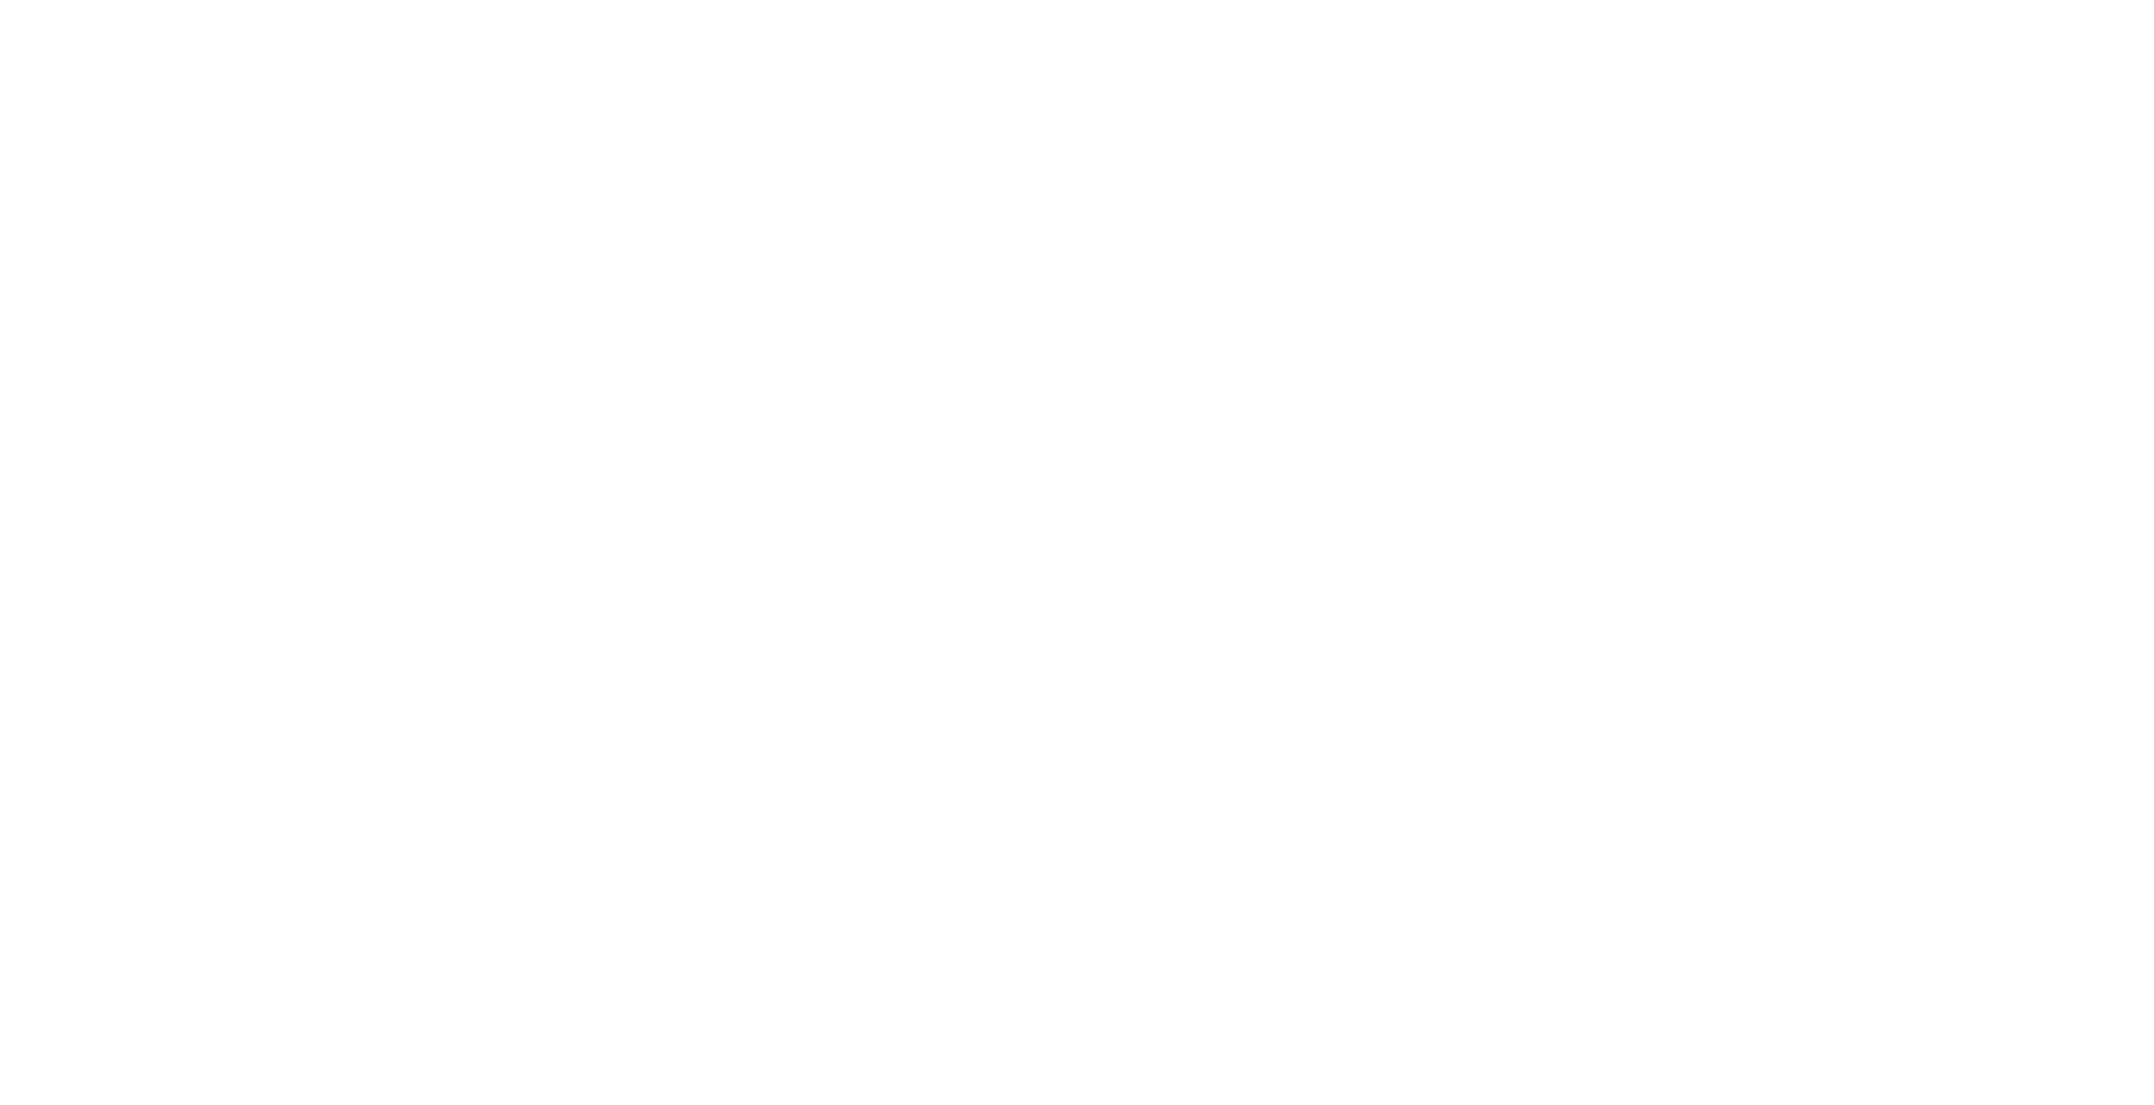 https://nhakhoadana.com/wp-content/uploads/2023/03/minh-tuan-dentist.png